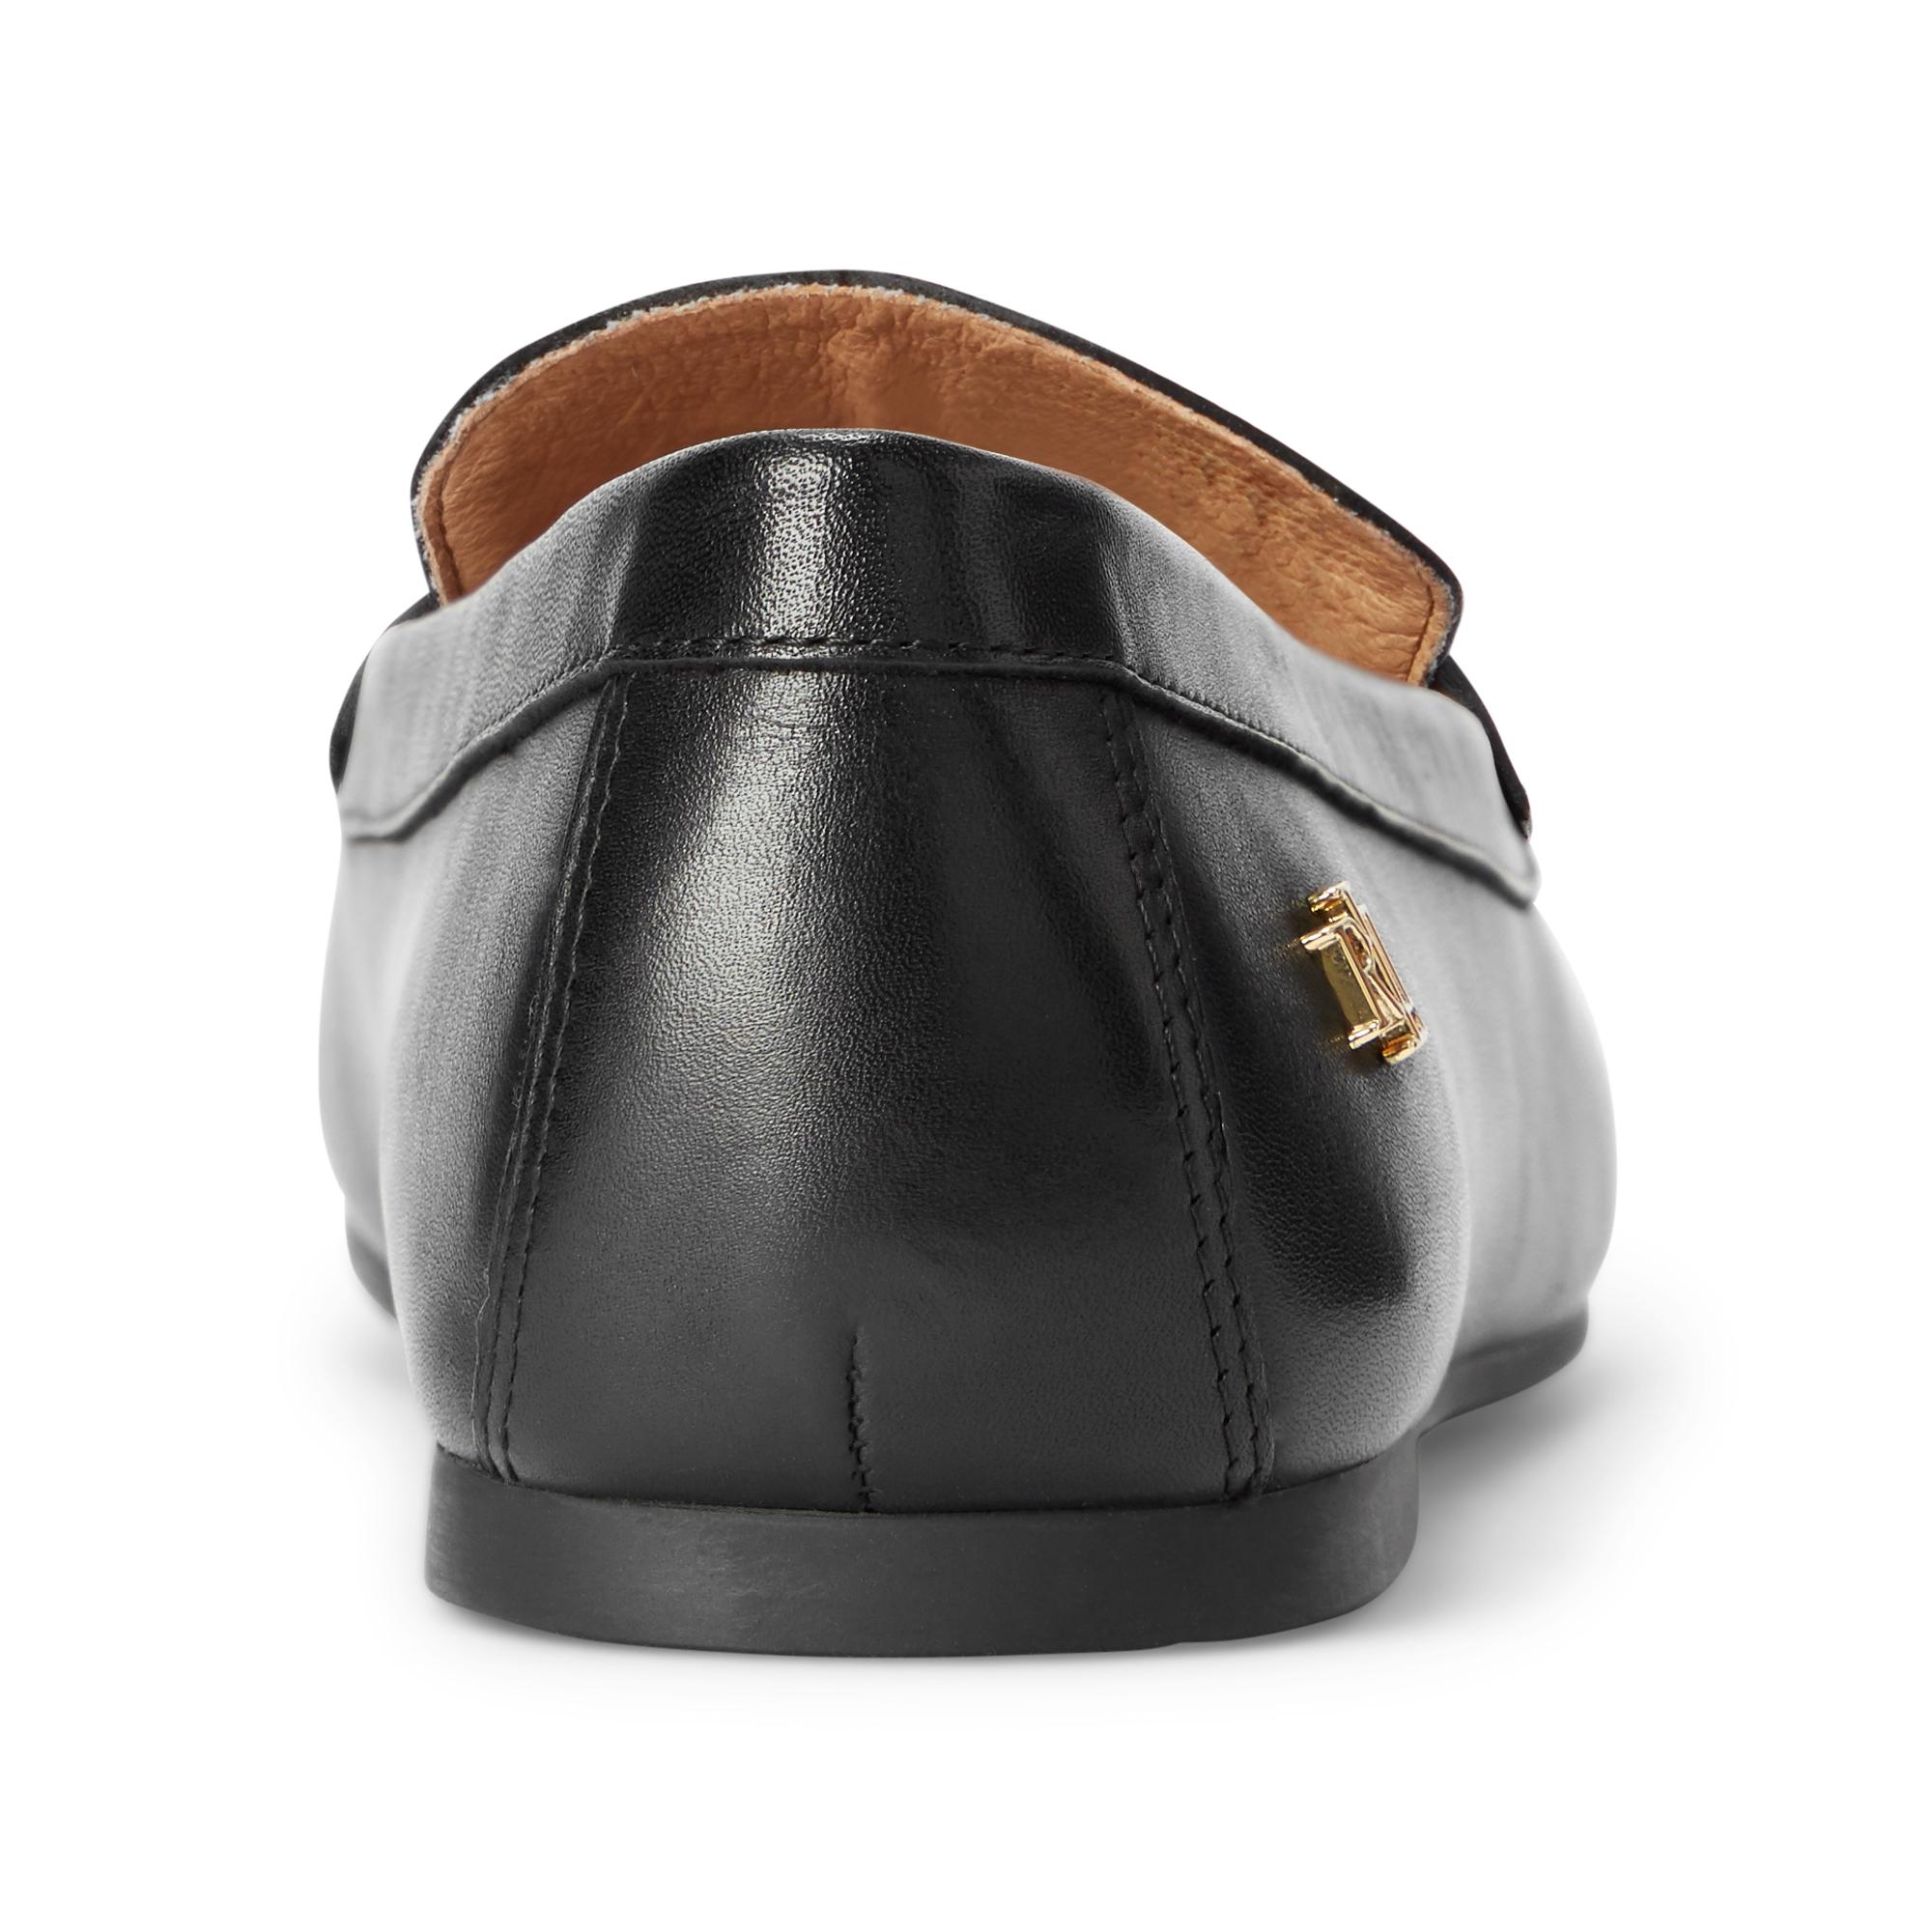 Ralph Lauren Ralph Lauren Adison Burnished Leather Loafer in Black | Lyst